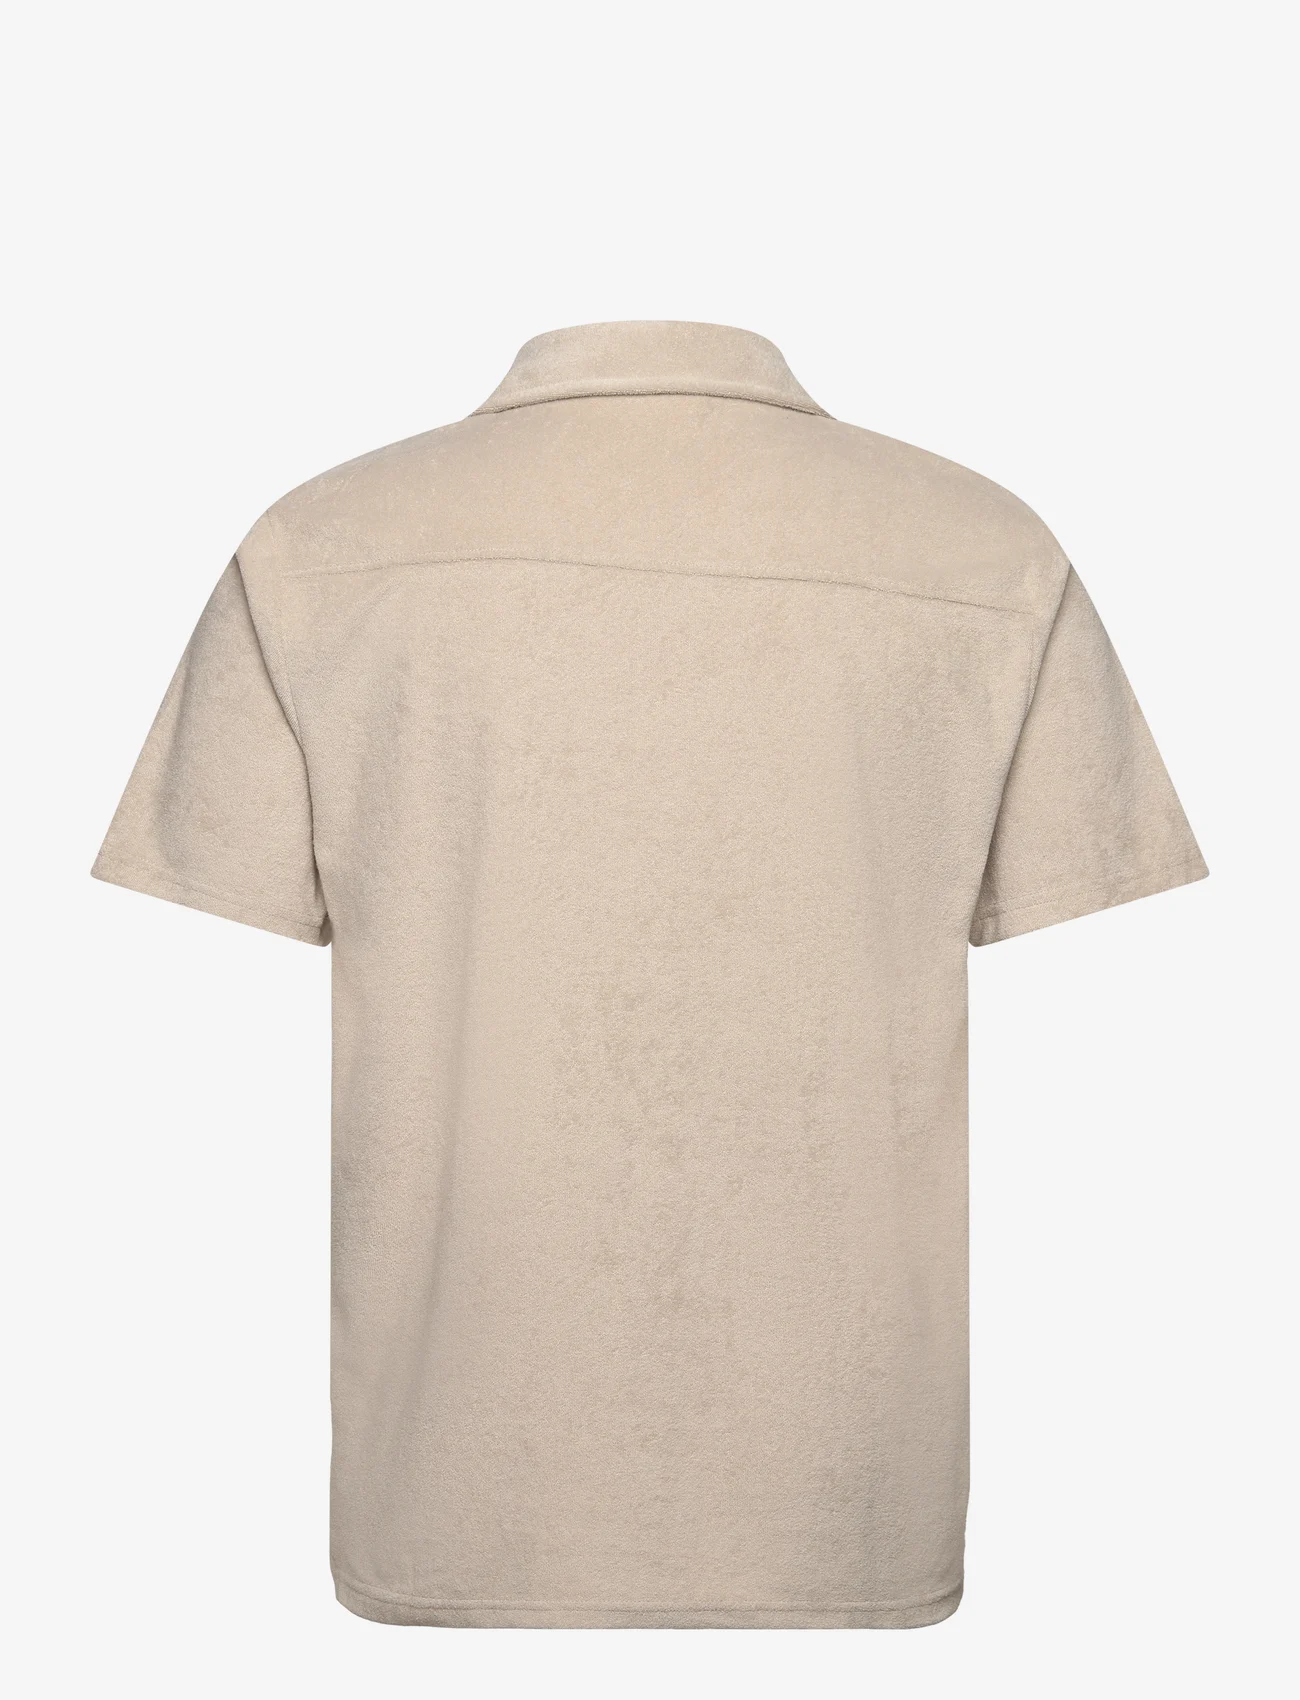 Lindbergh - SS shirt Terry - short-sleeved shirts - stone - 1